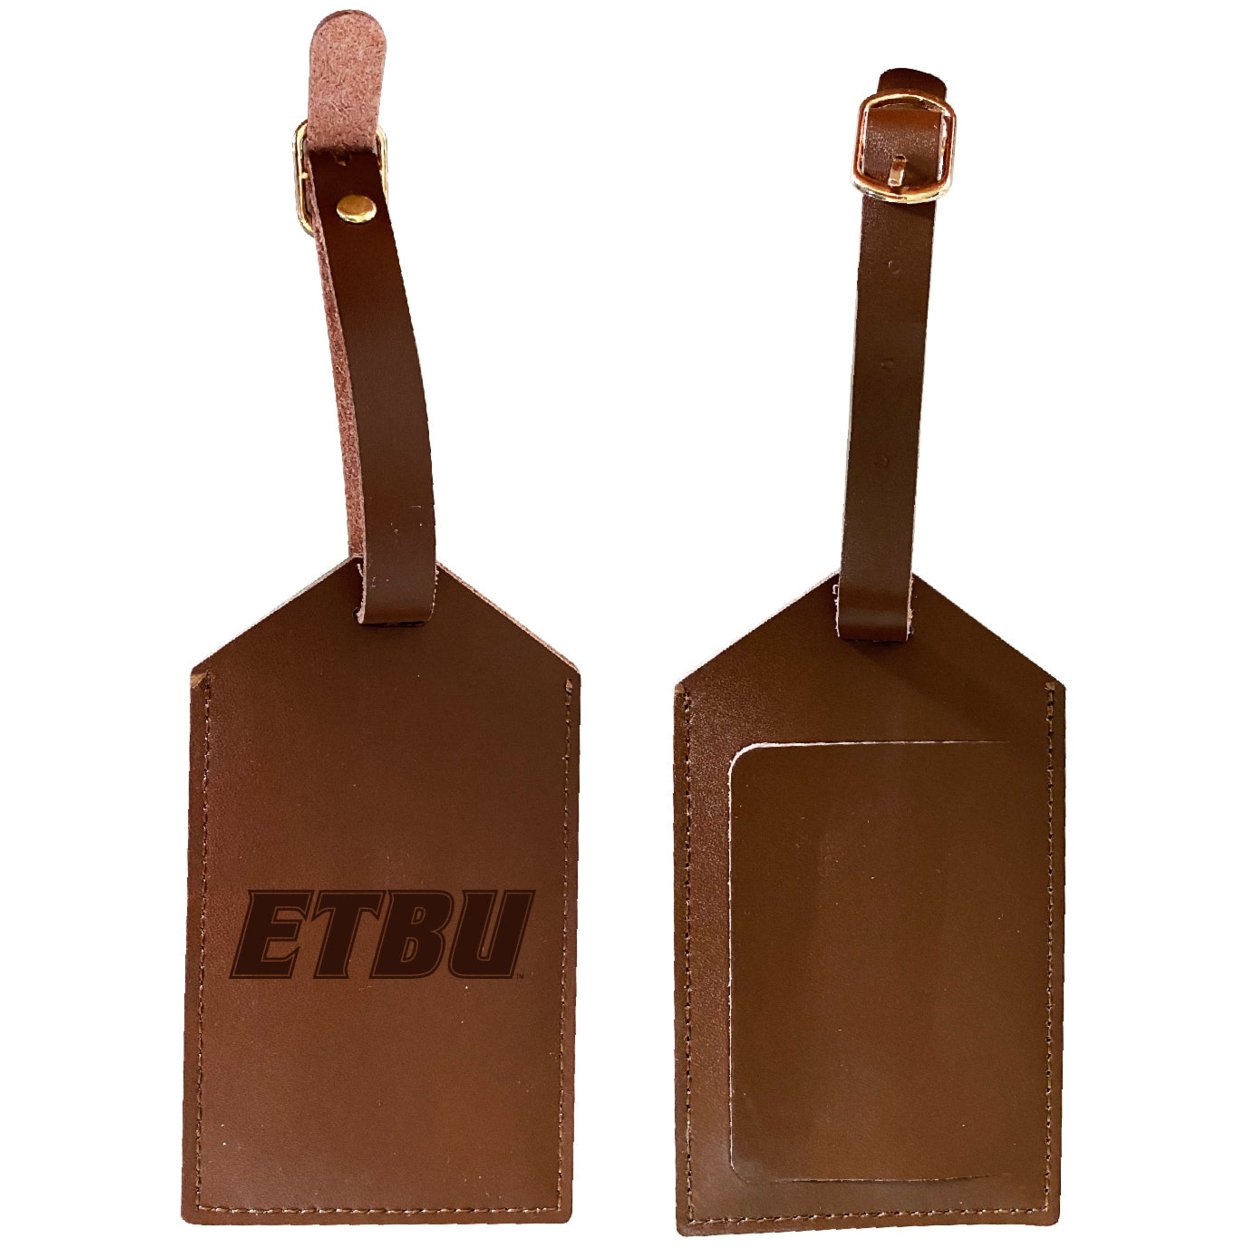 East Texas Baptist University Leather Luggage Tag Engraved